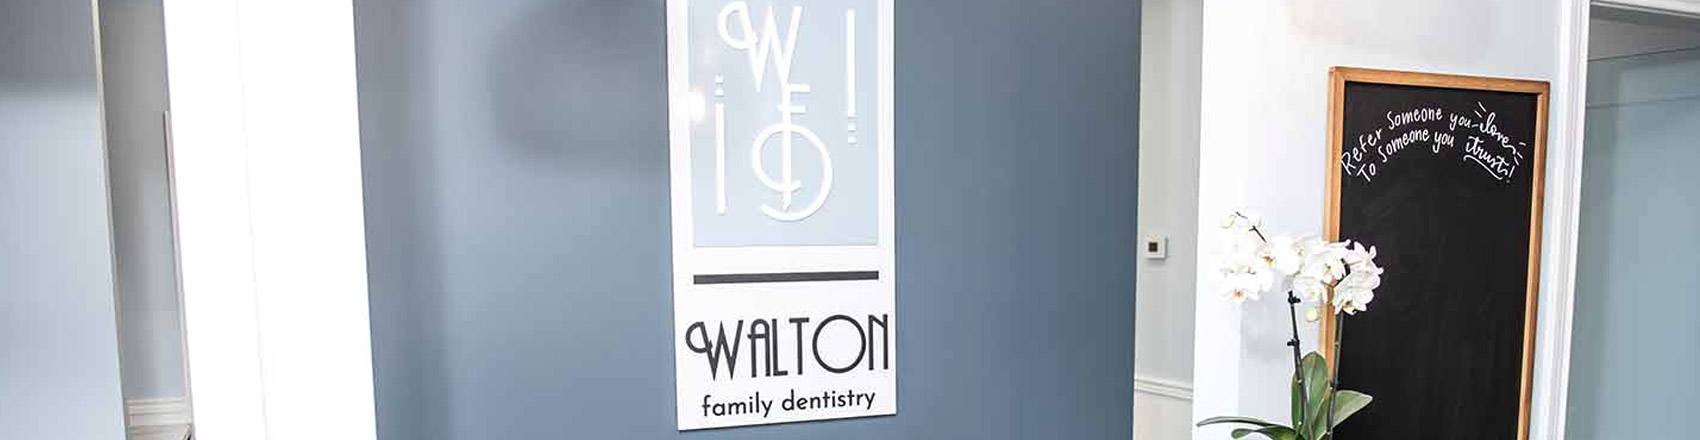 Walton Family Dentistry - Blog